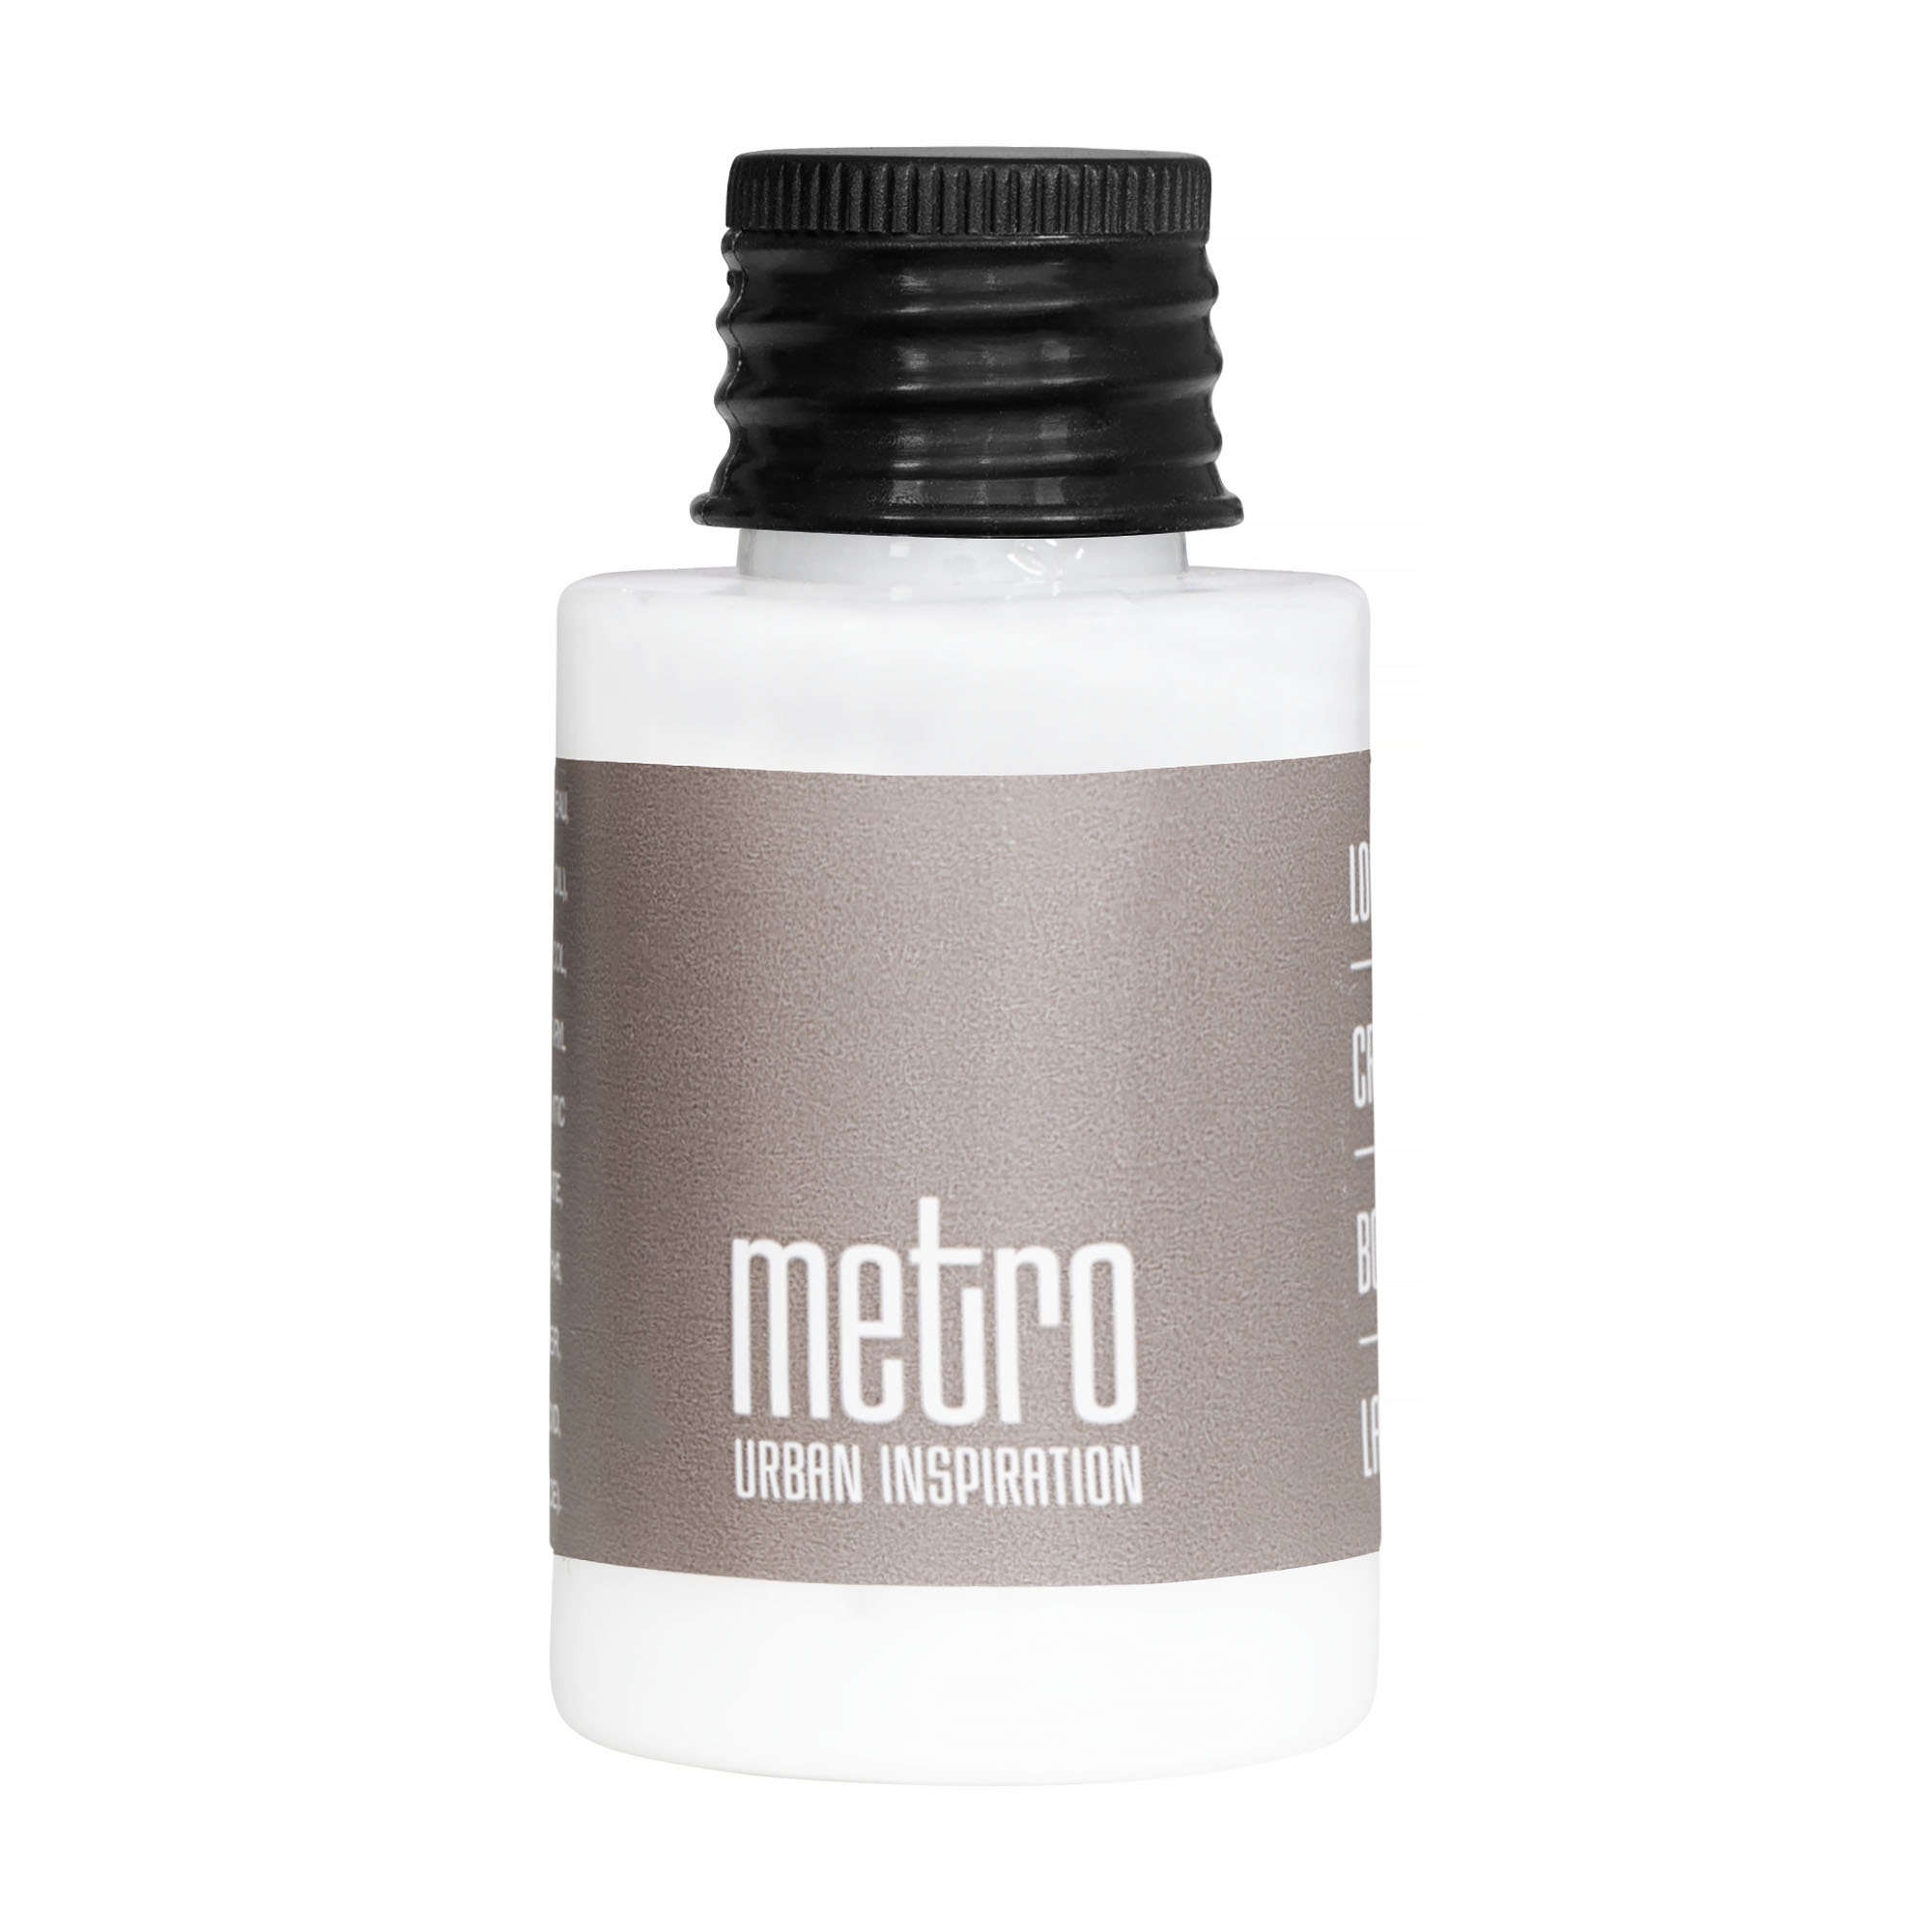 Body lotion Metro 35 ml